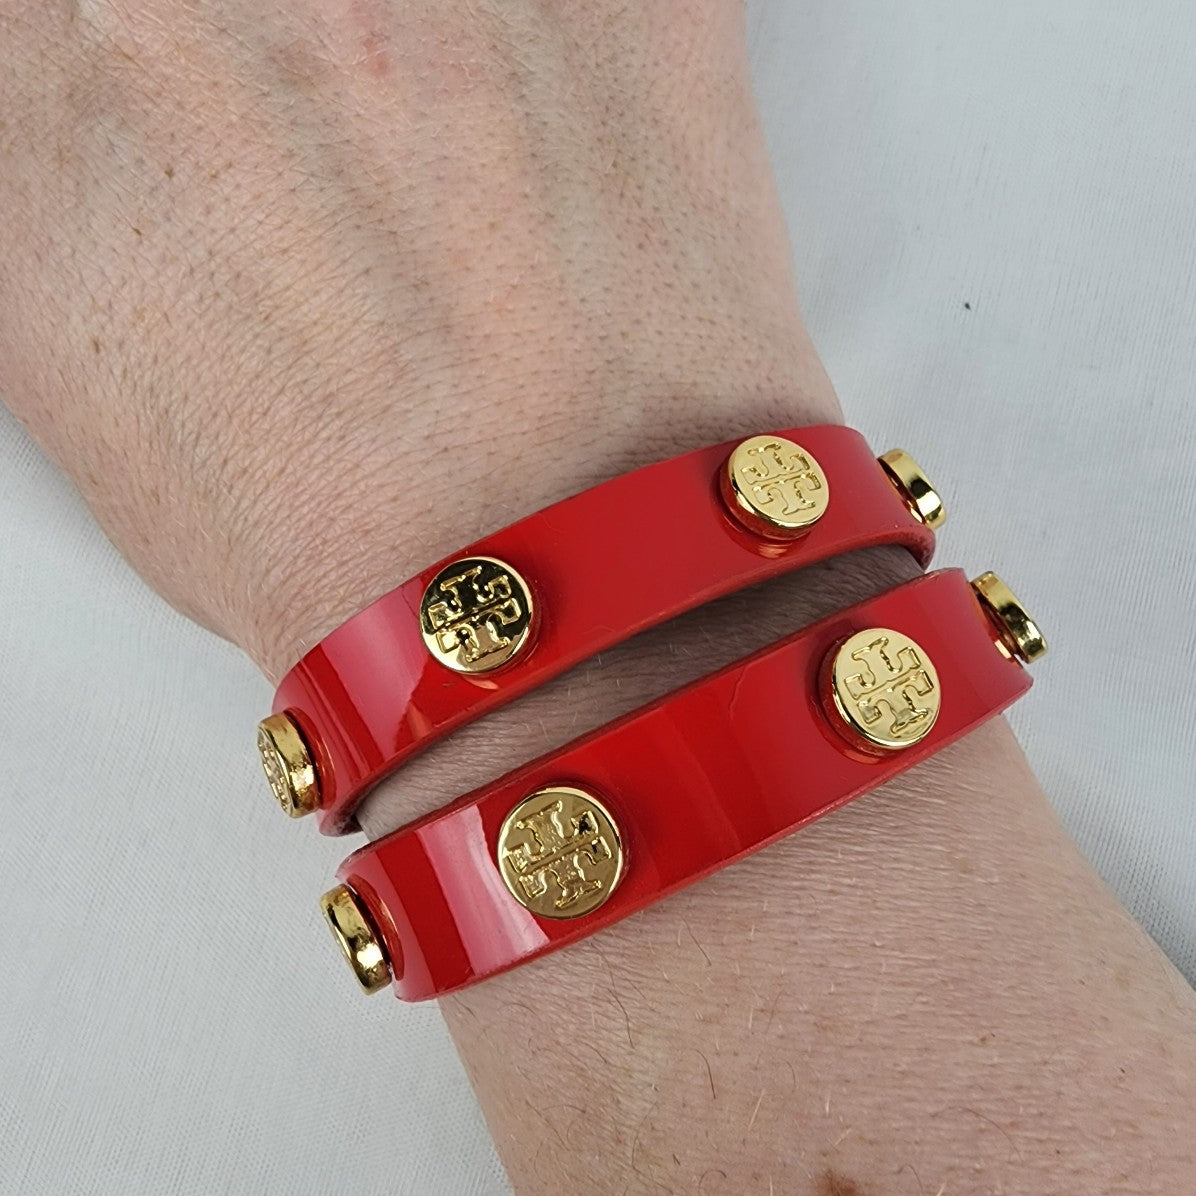 Designer Inspired Red & Gold Wrap Bracelet